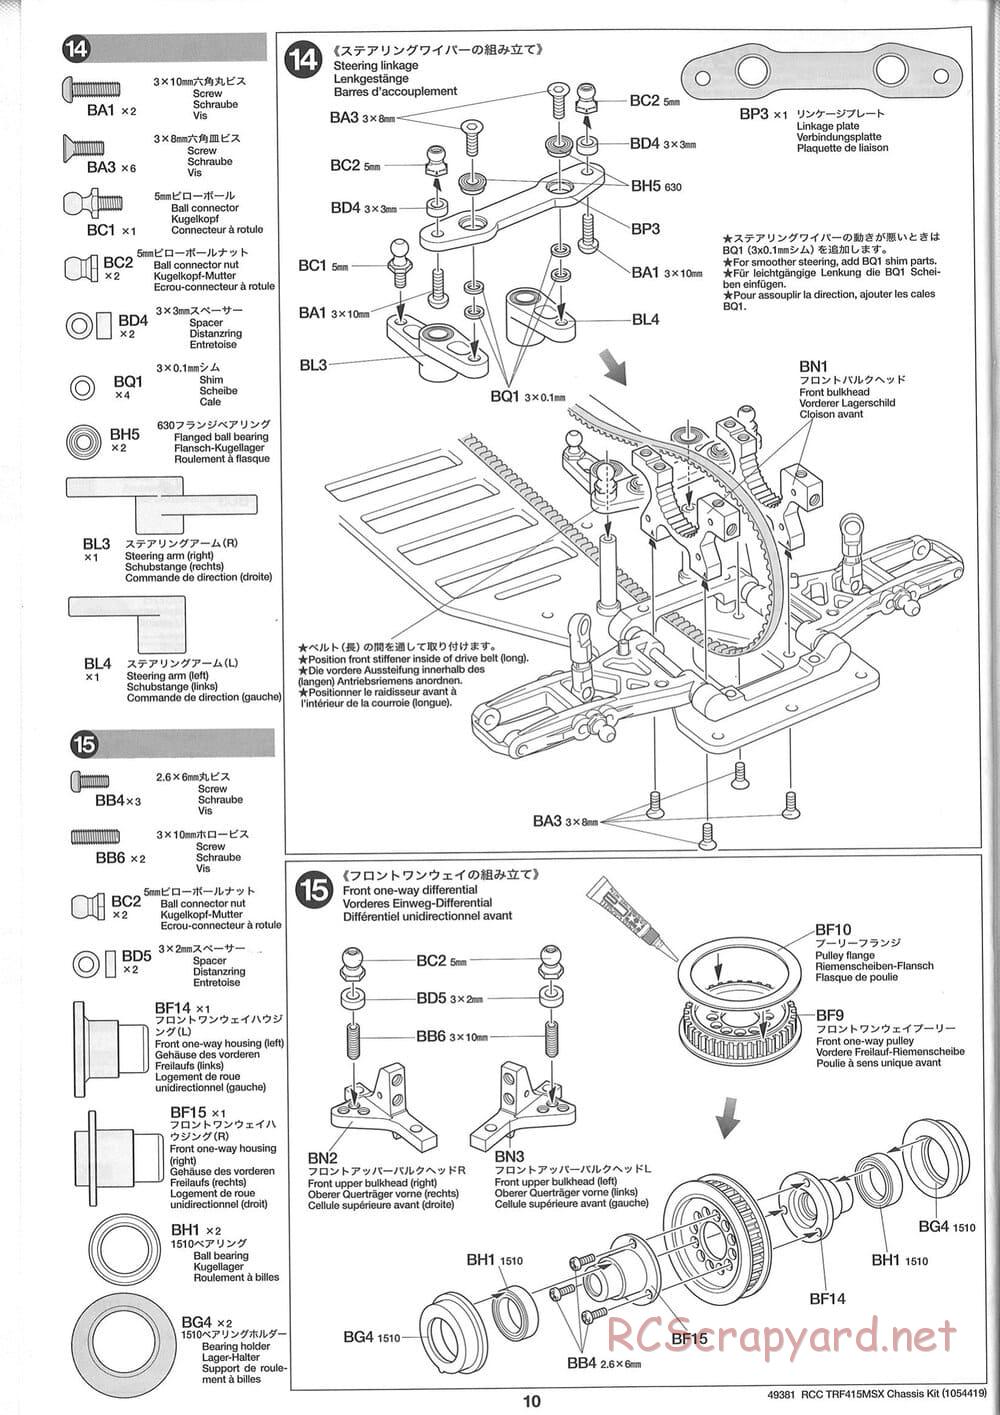 Tamiya - TRF415-MSX Chassis - Manual - Page 10